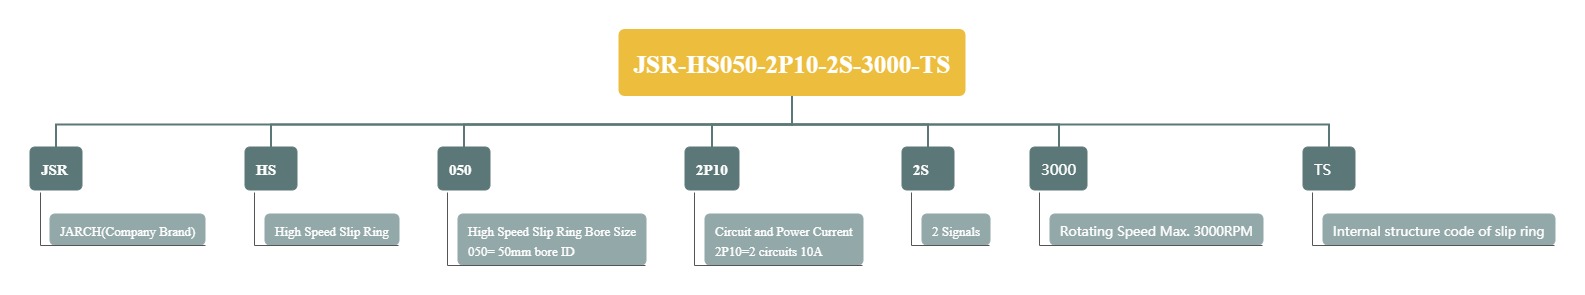 JSR-HS050-2P10-2S-3000-TS.jpg